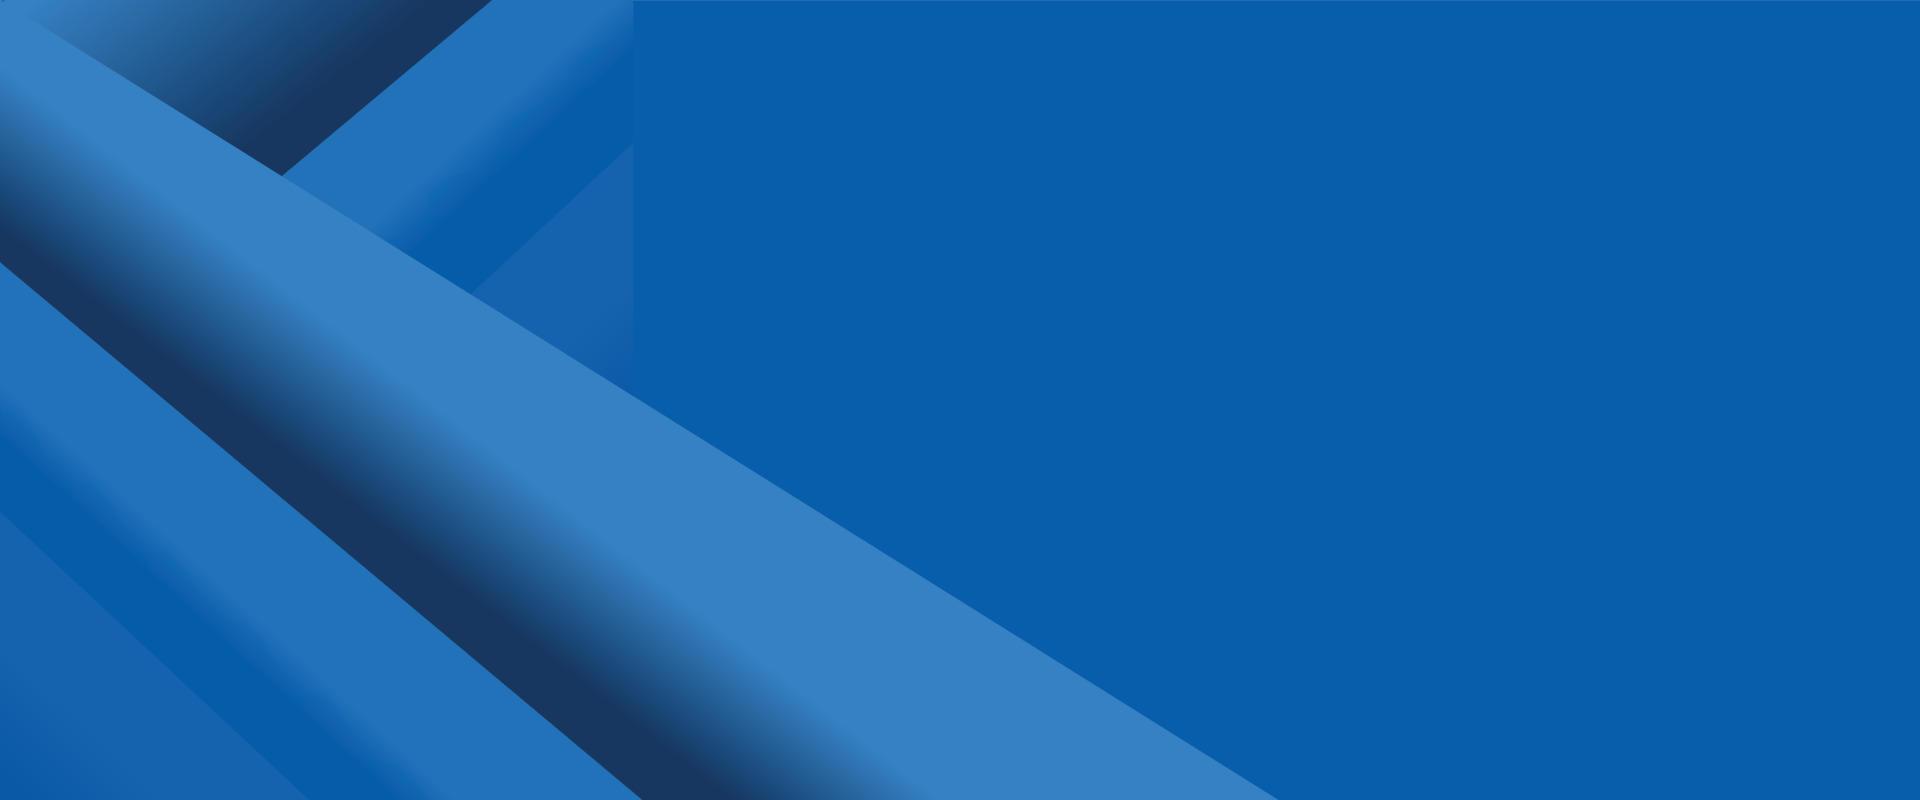 blå abstrakt bakgrund, vektor illustration